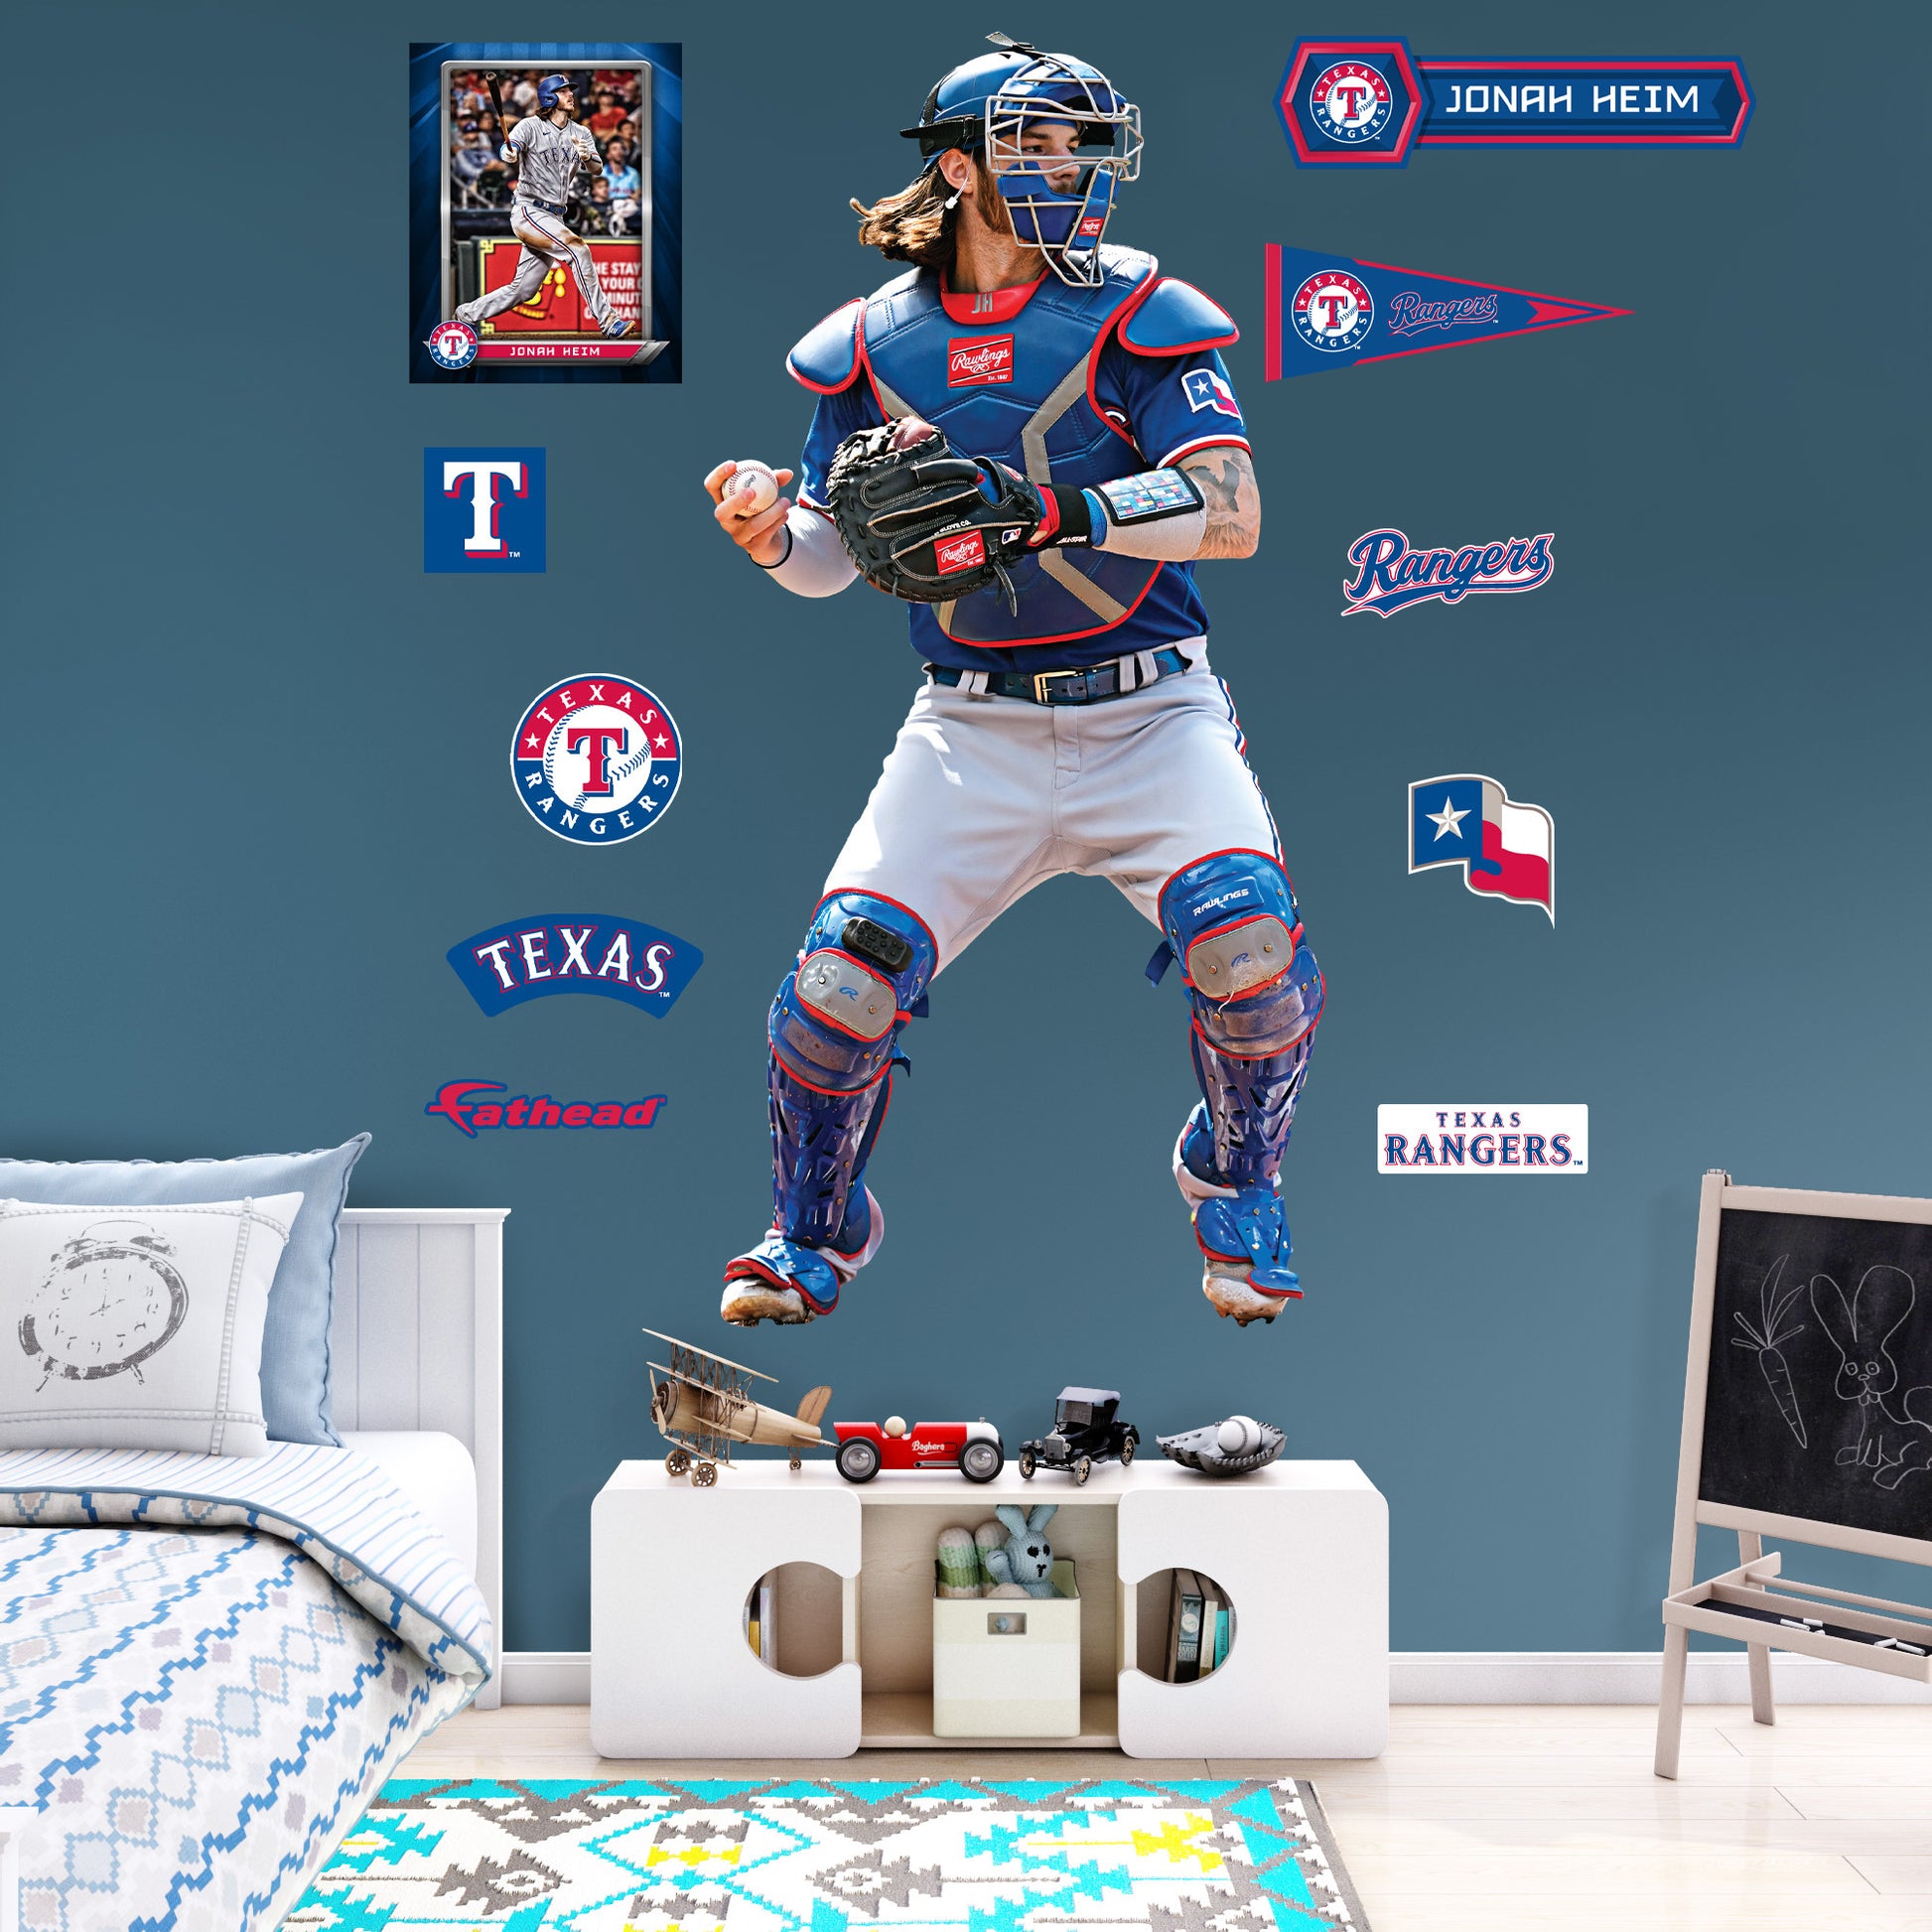 Texas Rangers Jonah Heim Teal Limited Men's American League